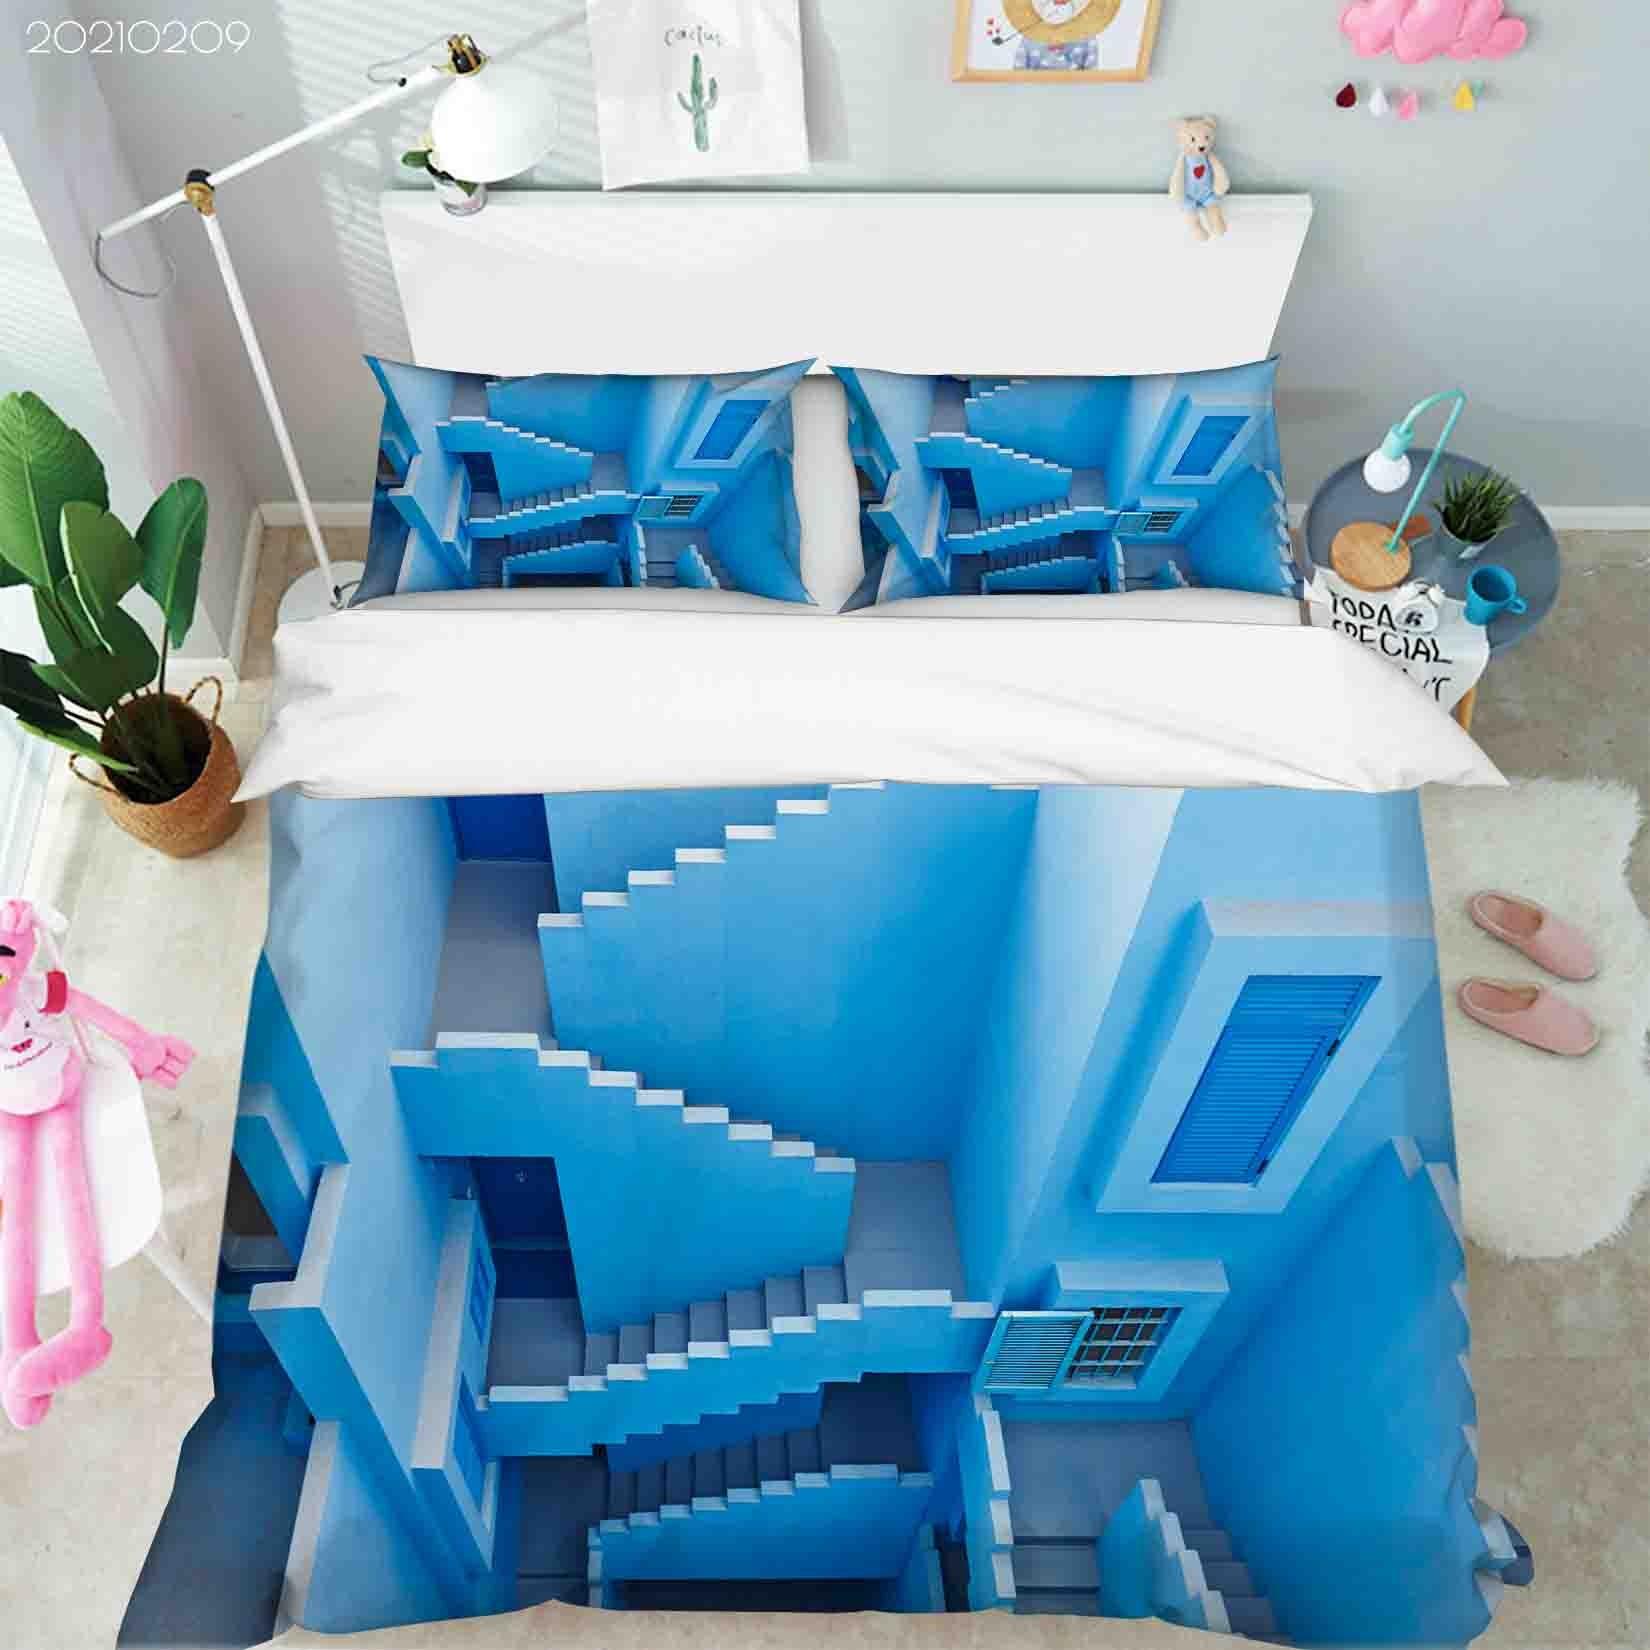 3D Abstract Blue Geometry Building Quilt Cover Set Bedding Set Duvet Cover Pillowcases 331- Jess Art Decoration